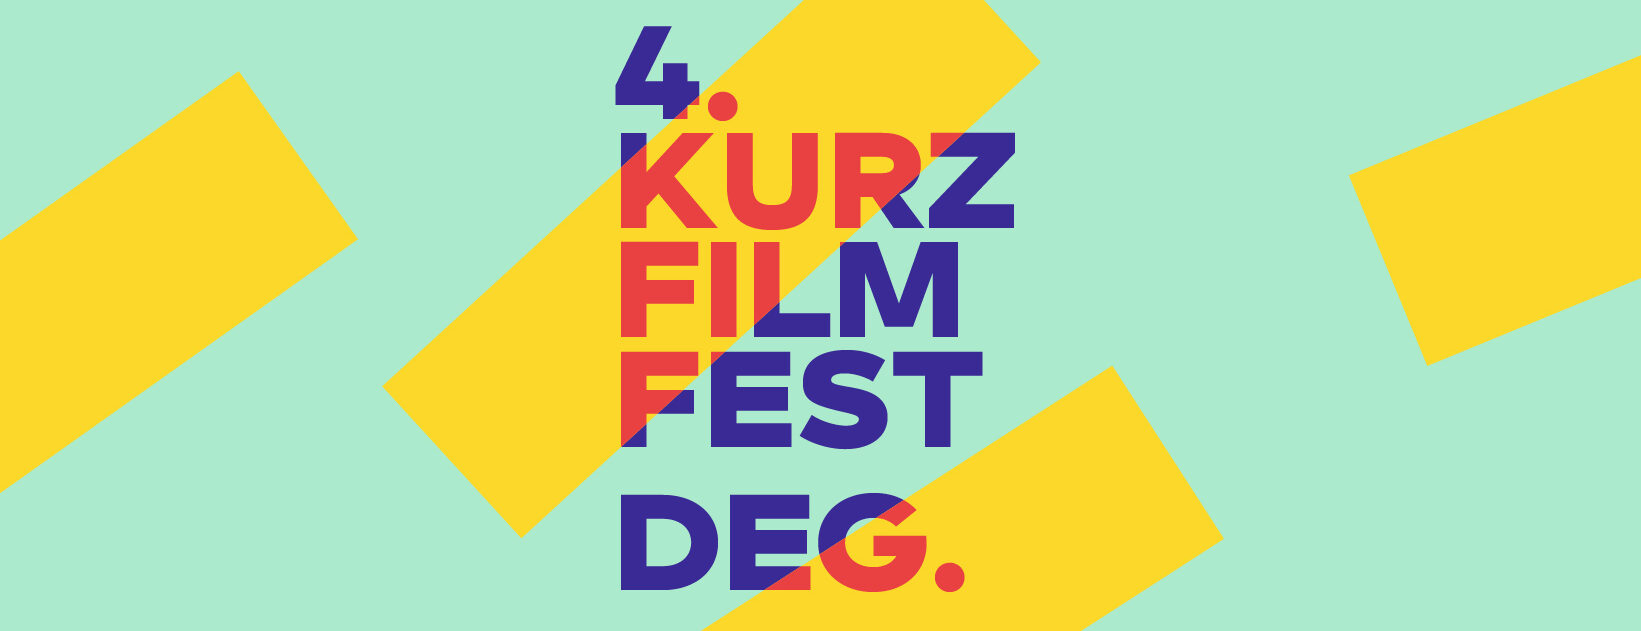 4. KURZ FILM FEST DEG.